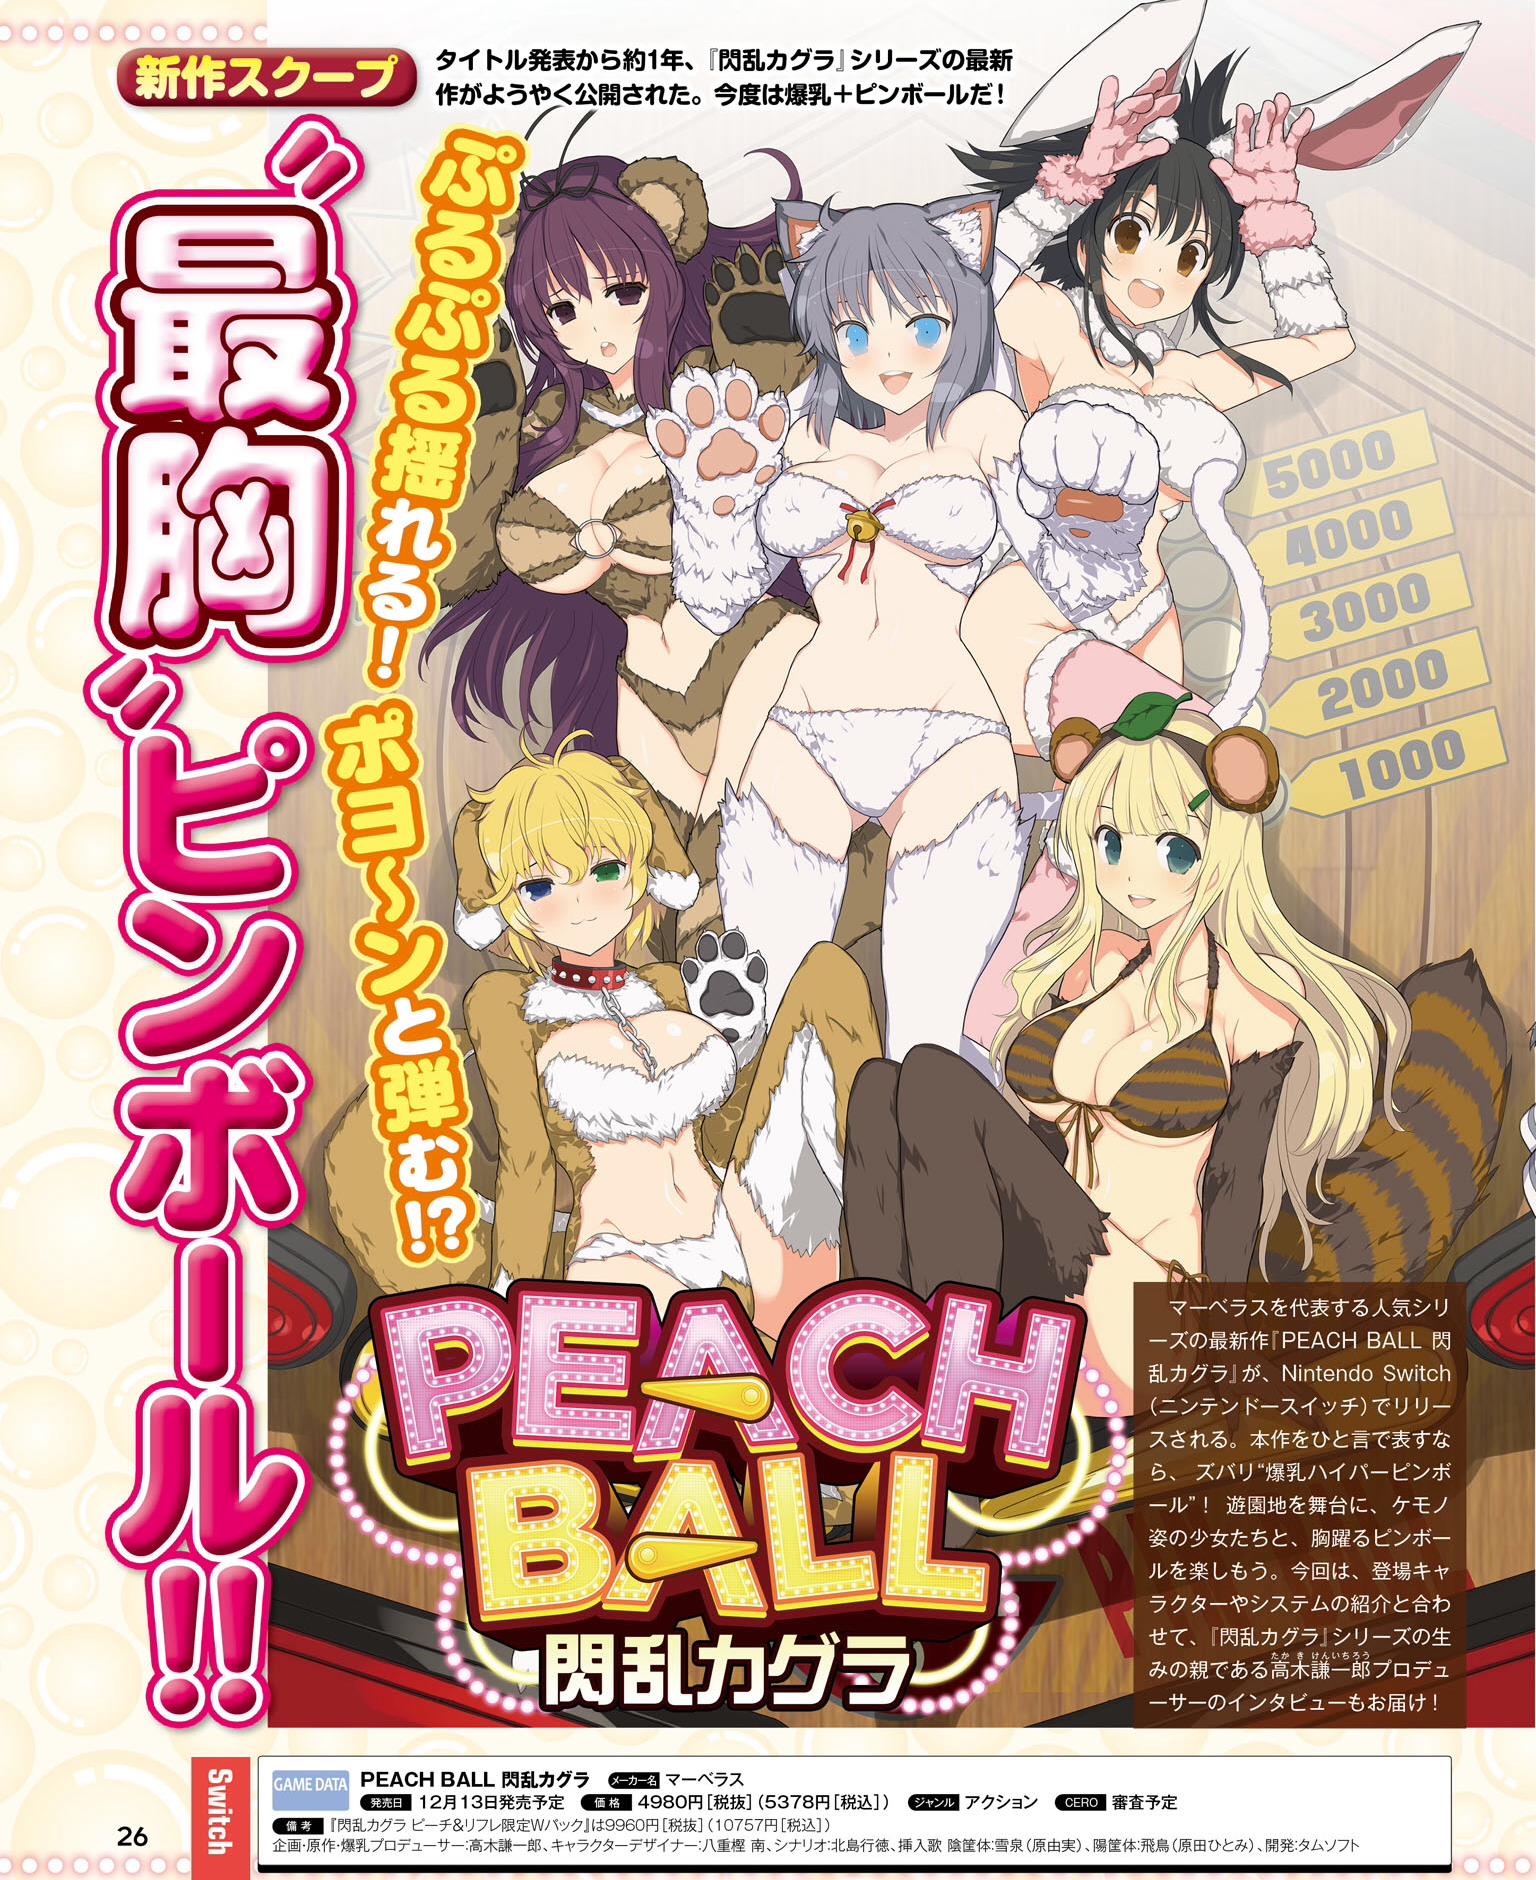 Senran Kagura Peach Ball Game Poster – My Hot Posters